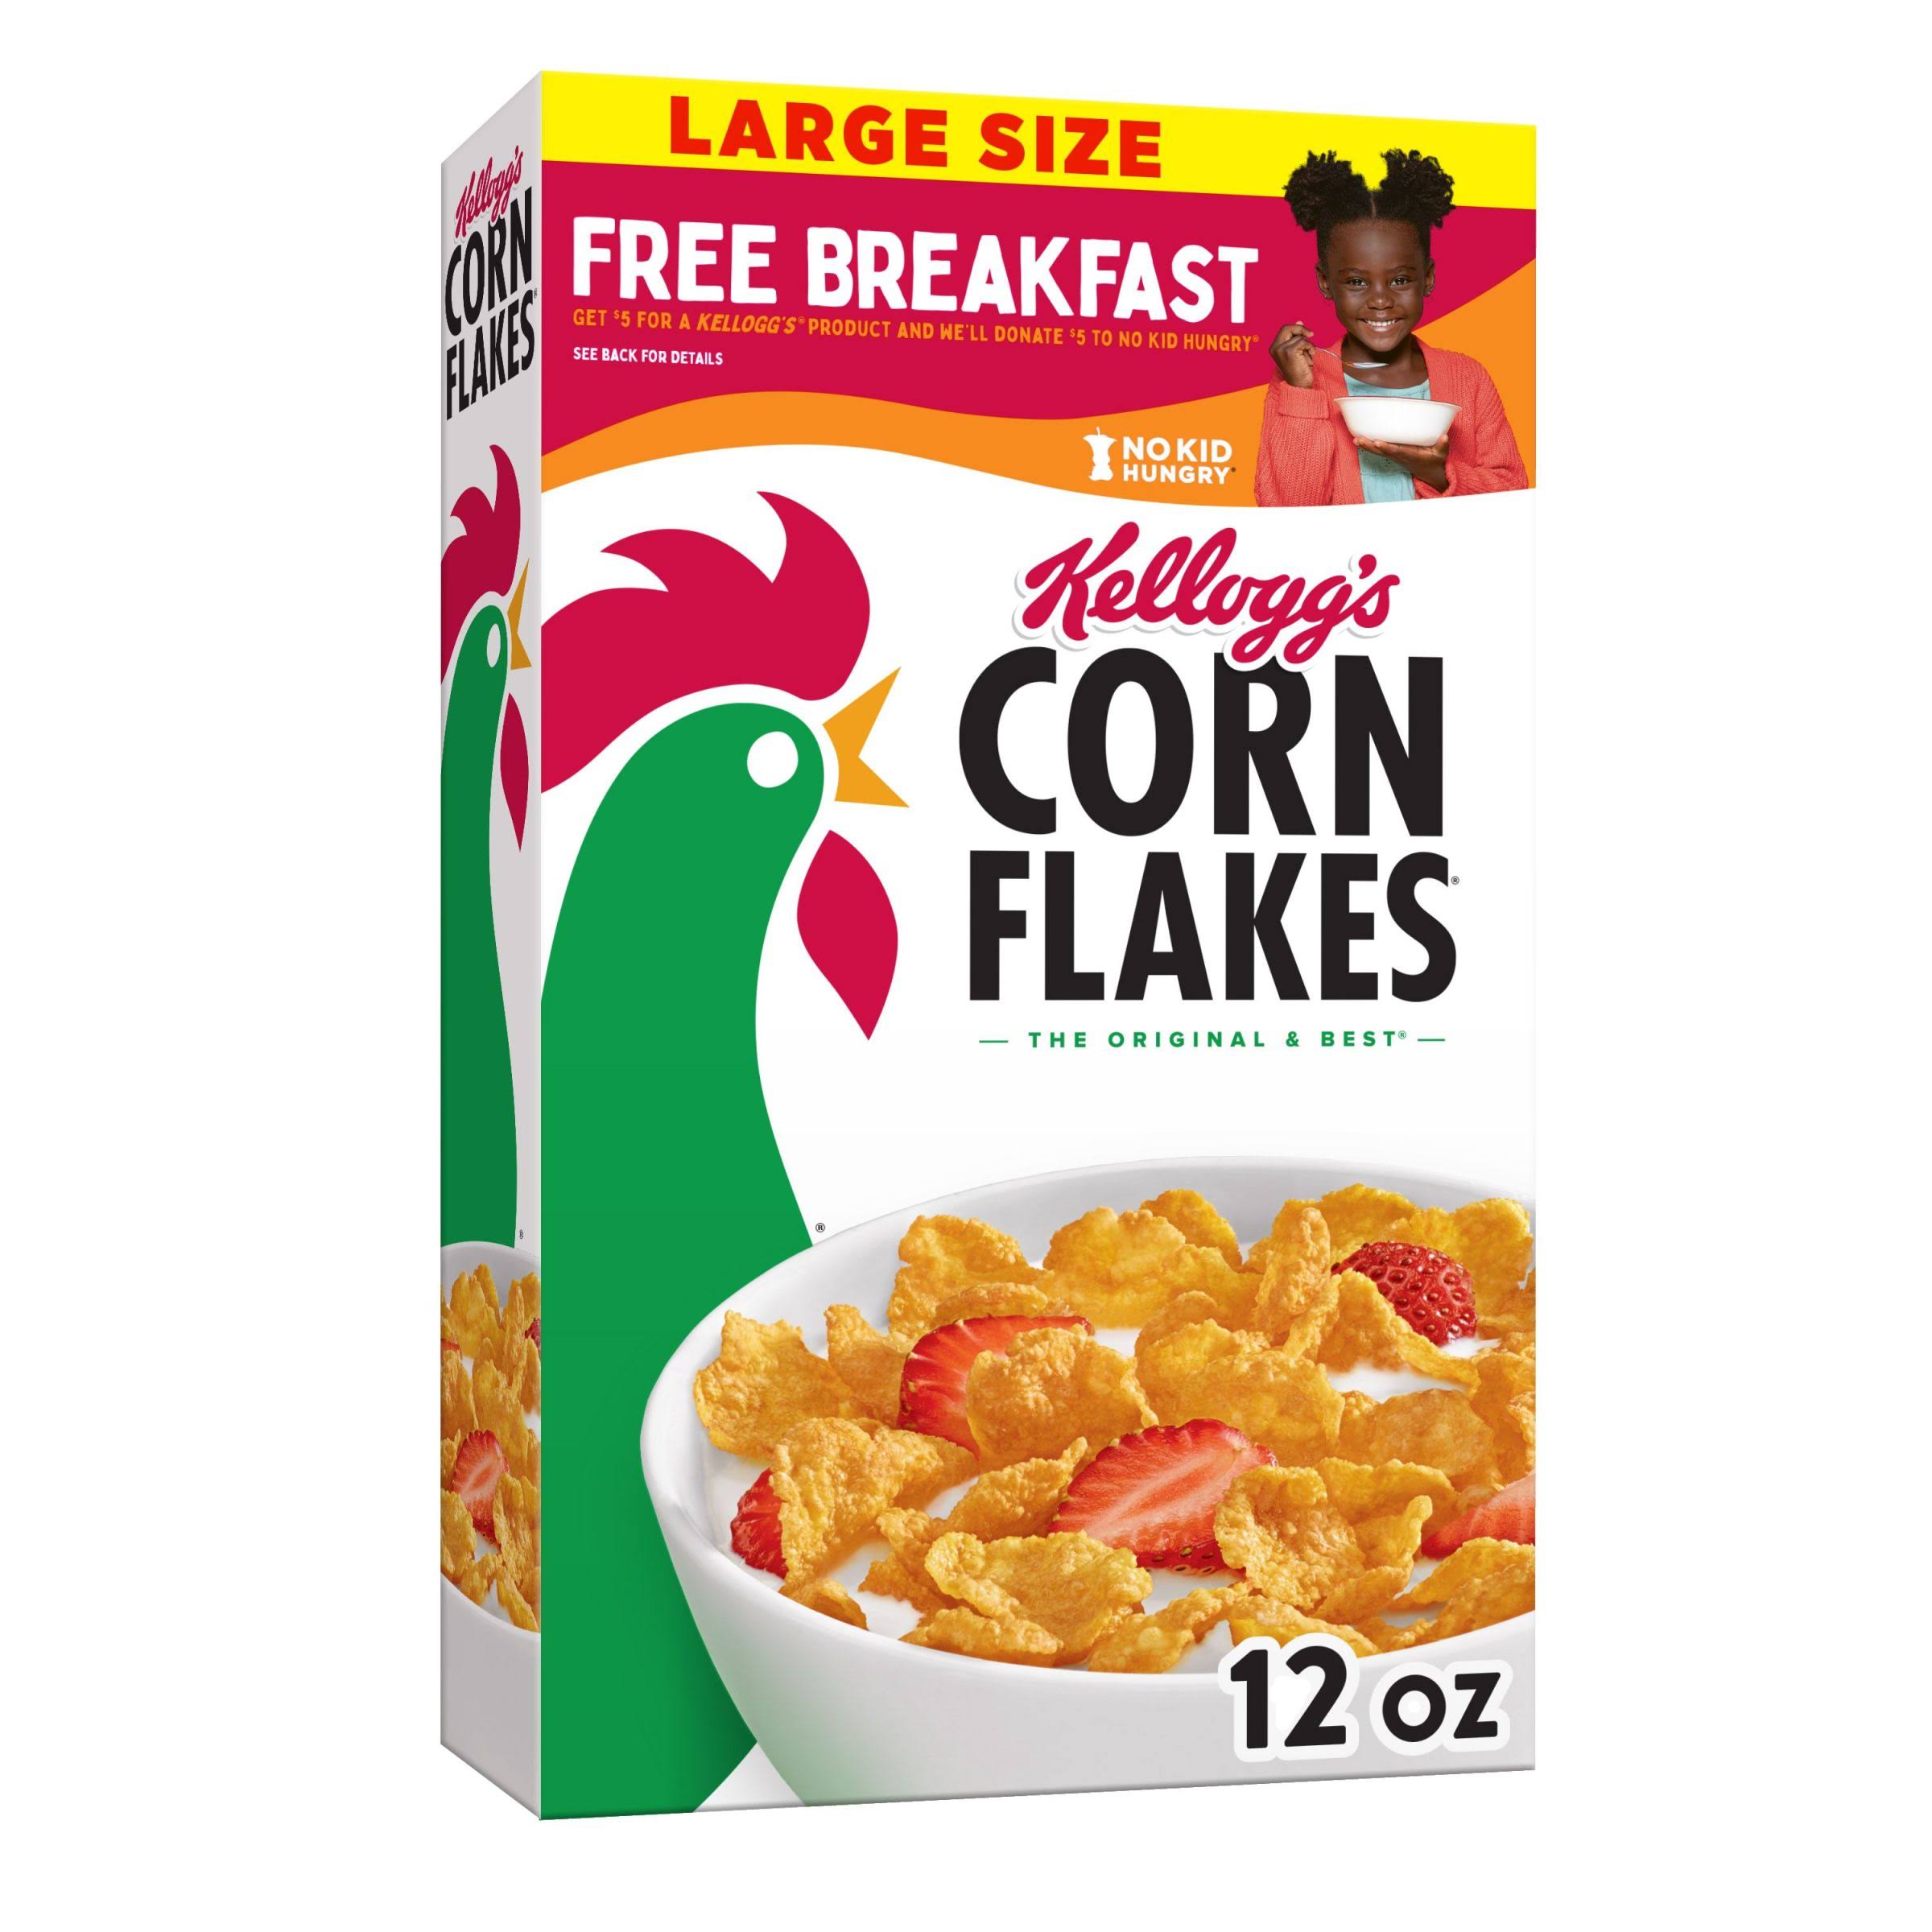 Kellogg's The Original & Best Corn Flakes - 12 oz